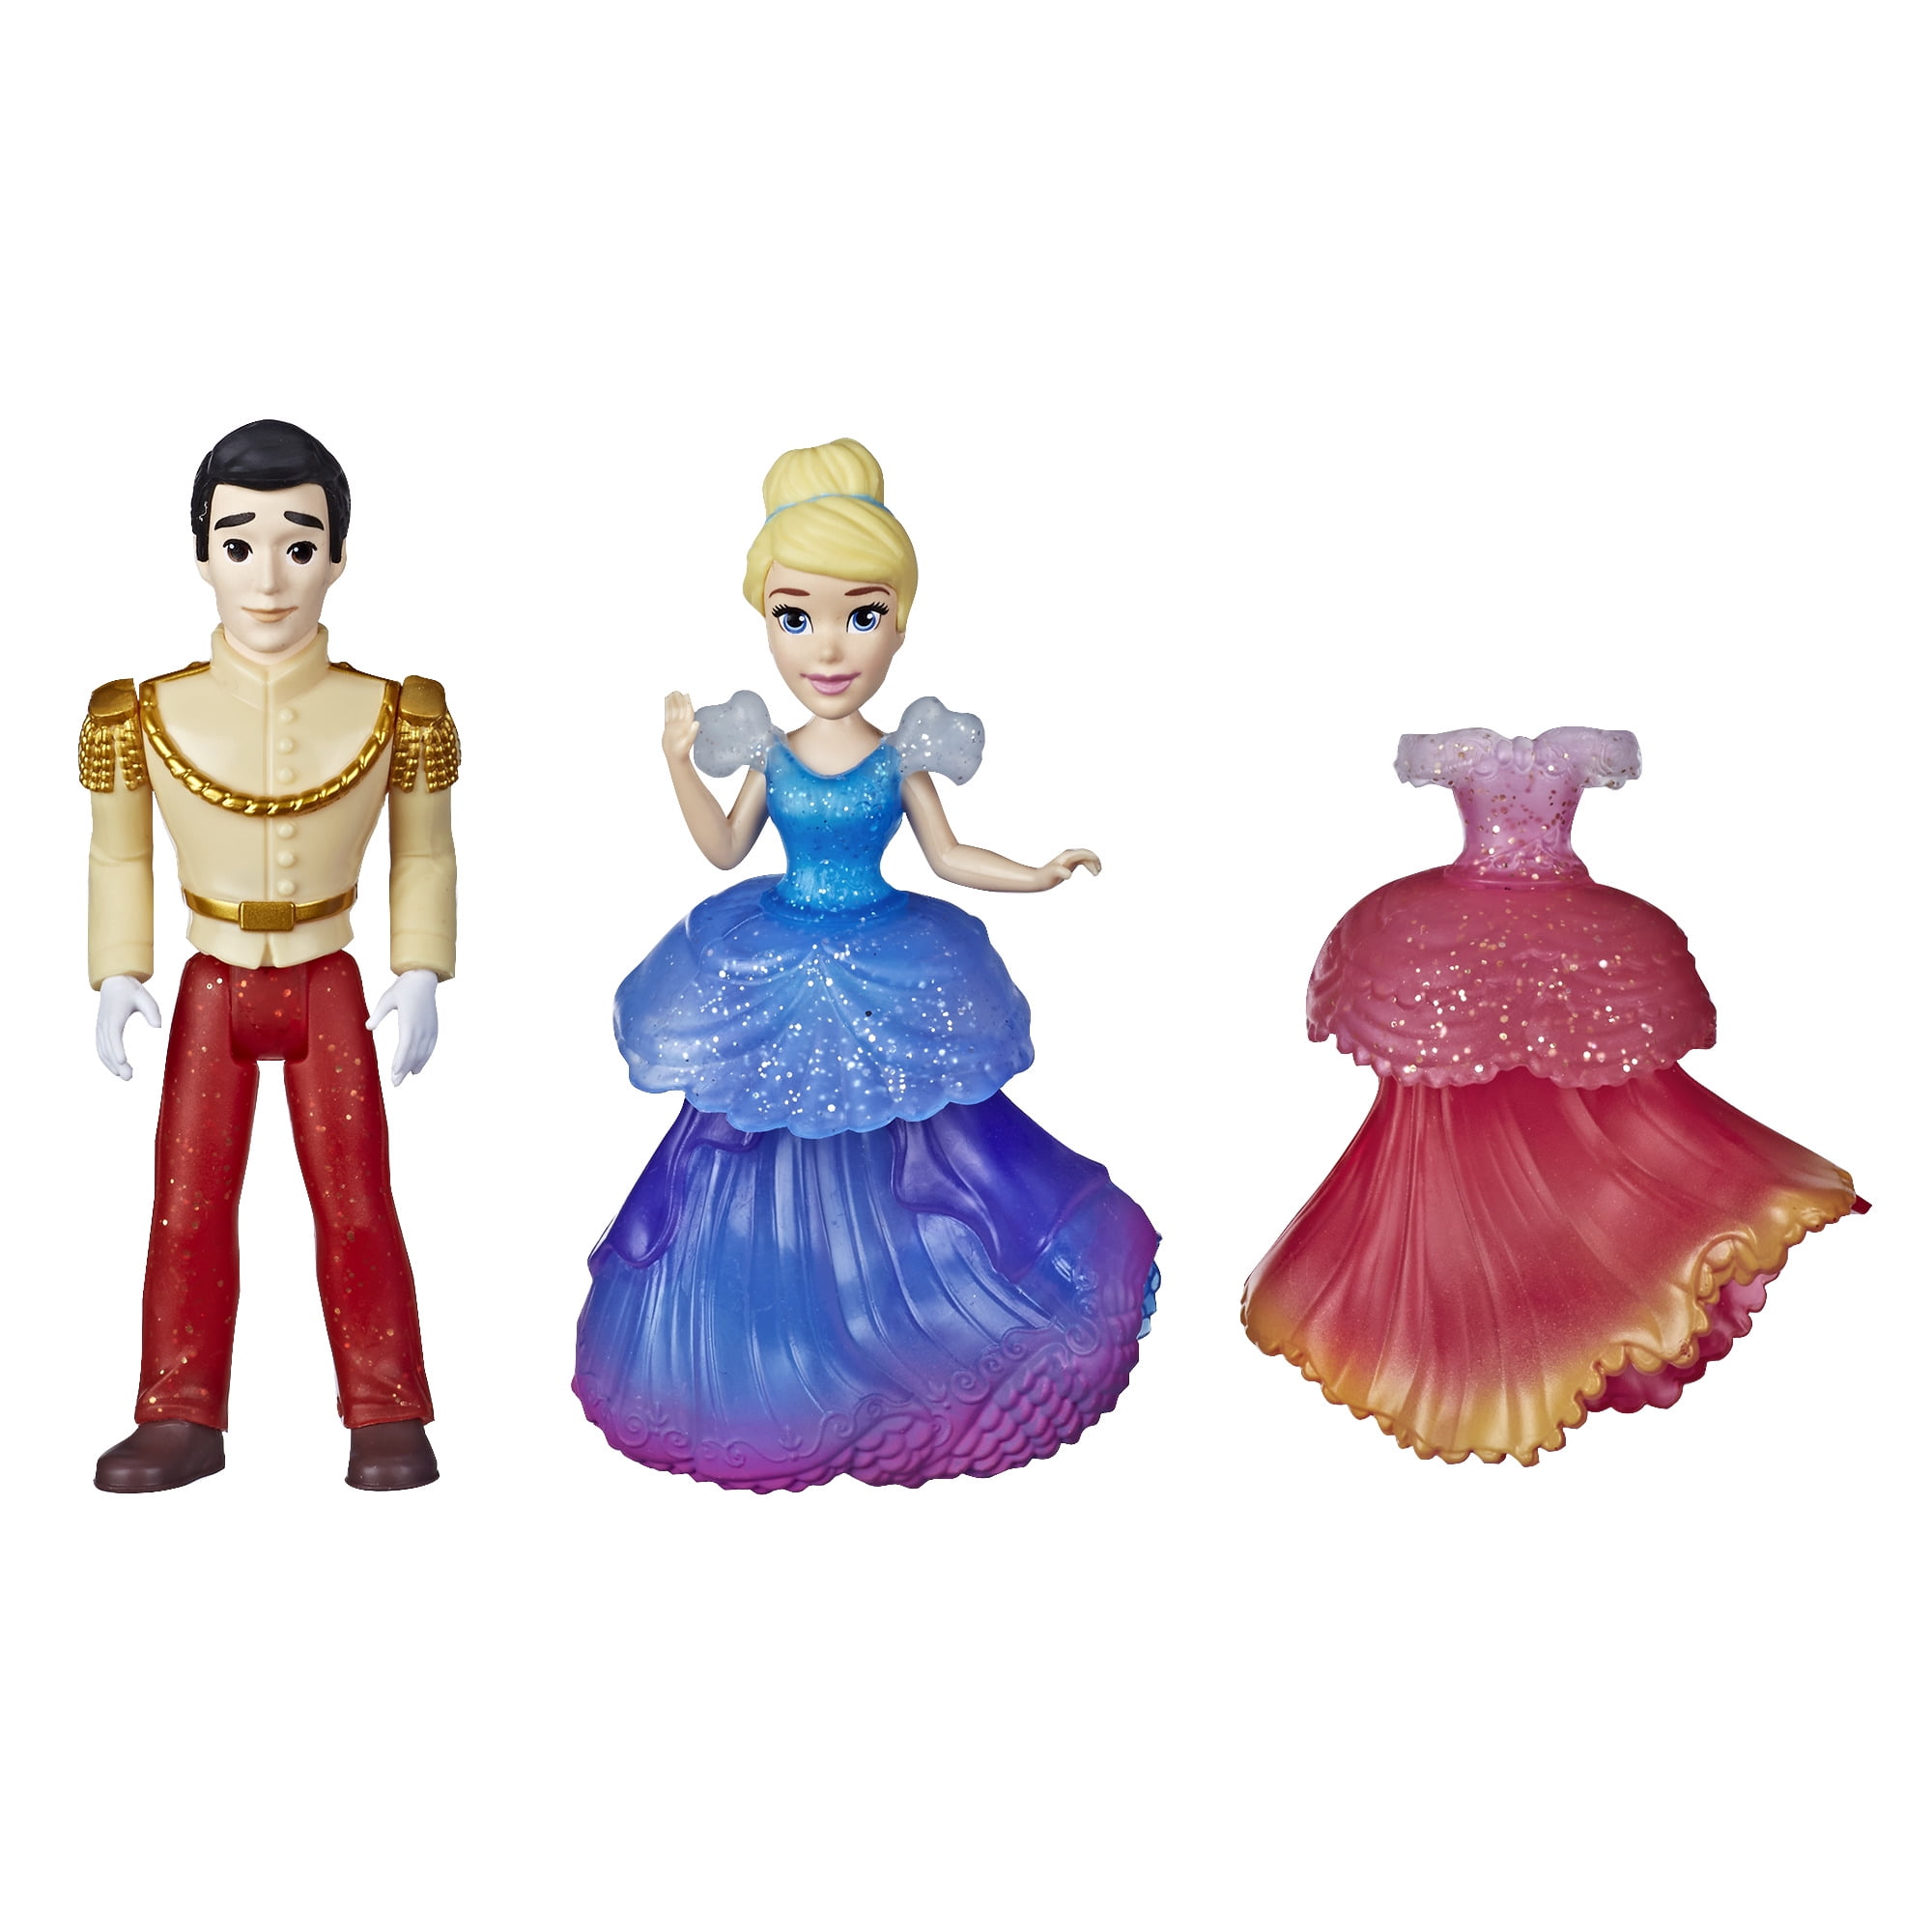 Mermaid Princess Dress Up Play Doll Figure Playset ~ Colour Varies 